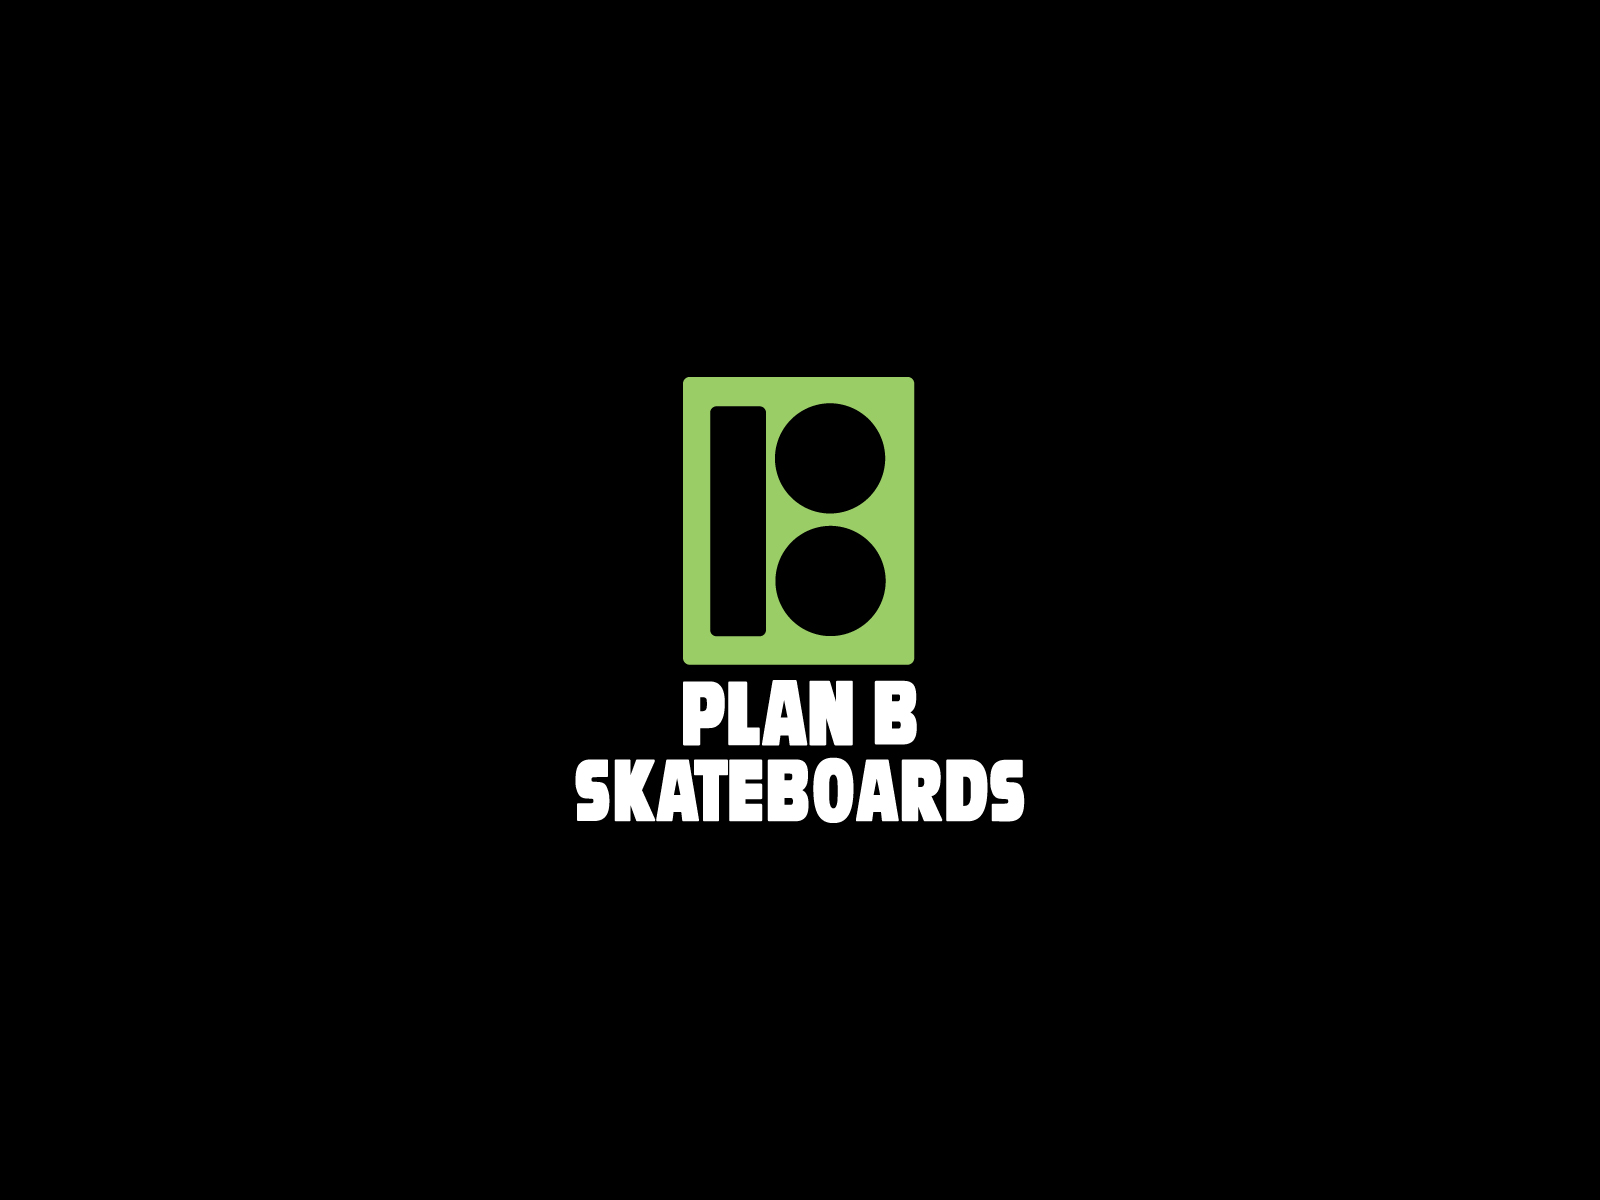 Skateboarding logos Skateboarding wallpapers skateboard wallpapers 1600x1200